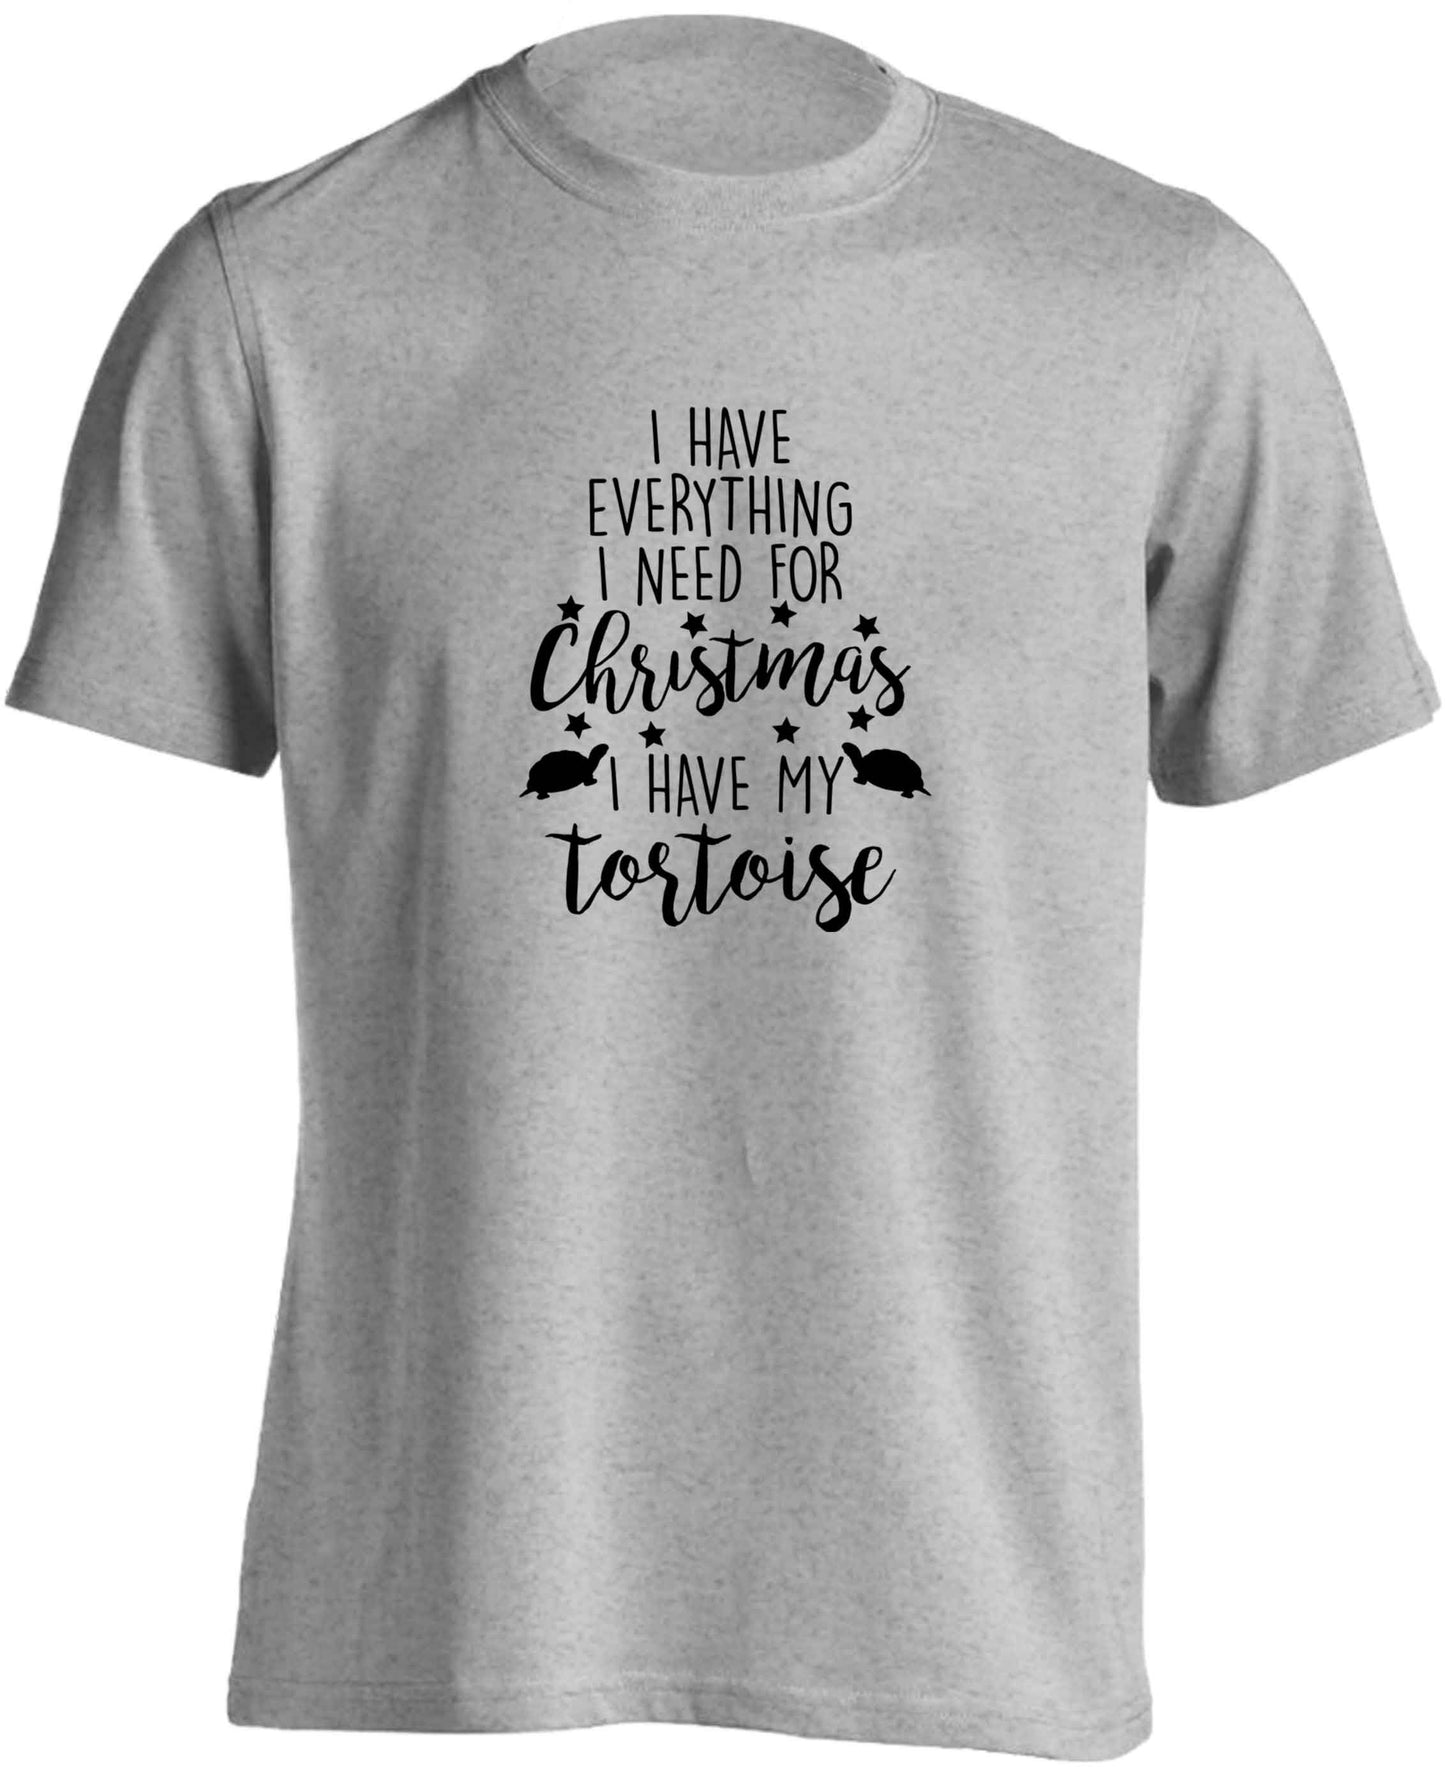 I have everything I need for Christmas I have my tortoise adults unisex grey Tshirt 2XL